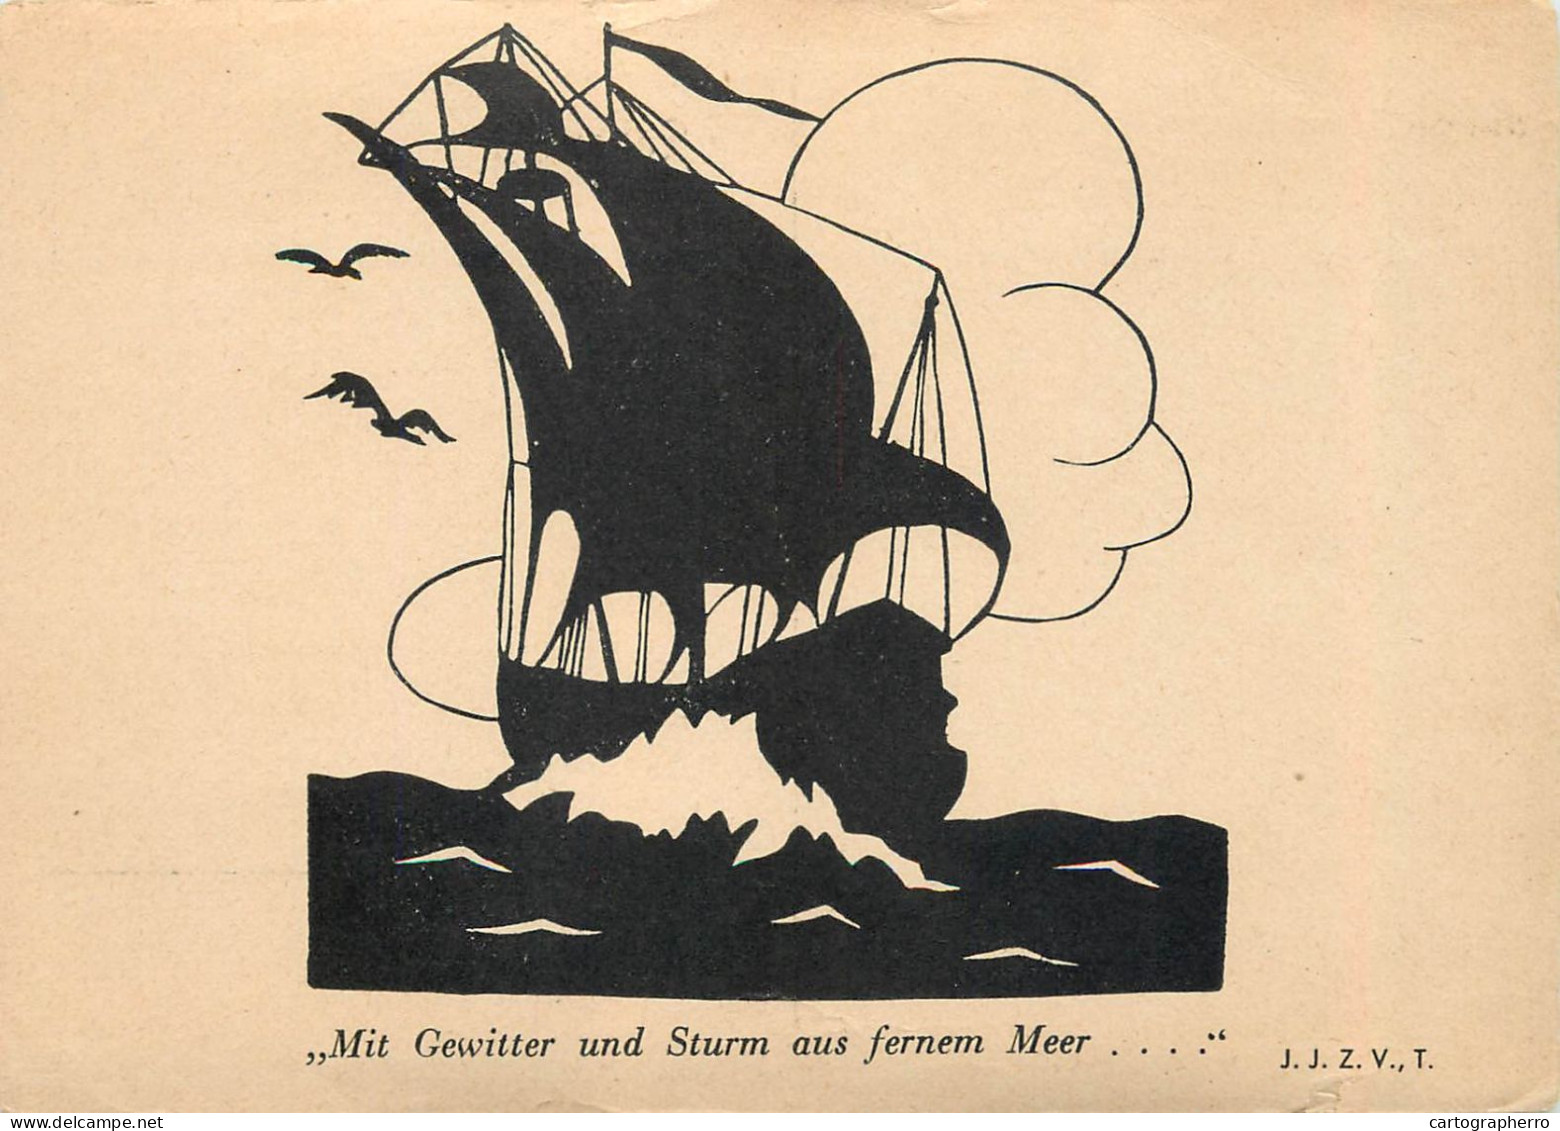 Navigation Sailing Vessels & Boats Themed Postcard Mit Gewitter Und Sturm Aus Fernem Meer - Sailing Vessels